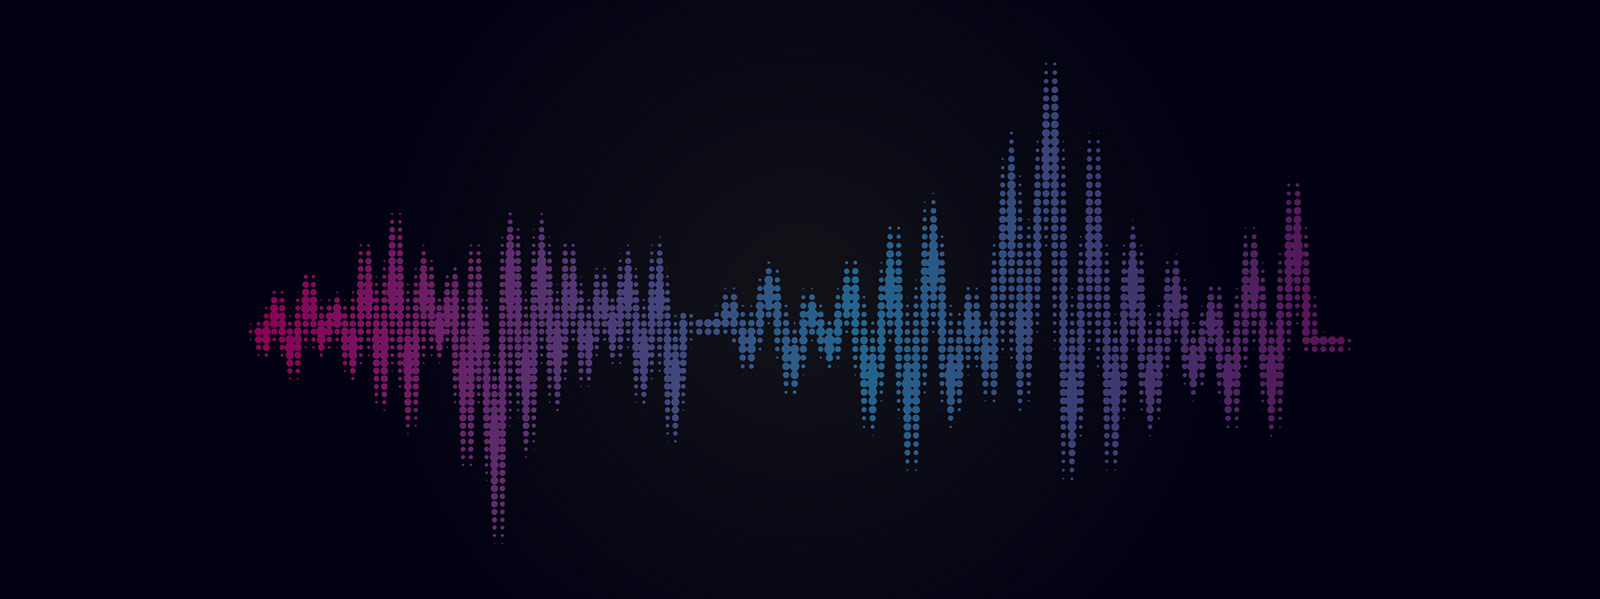 Soundwave of an audio file